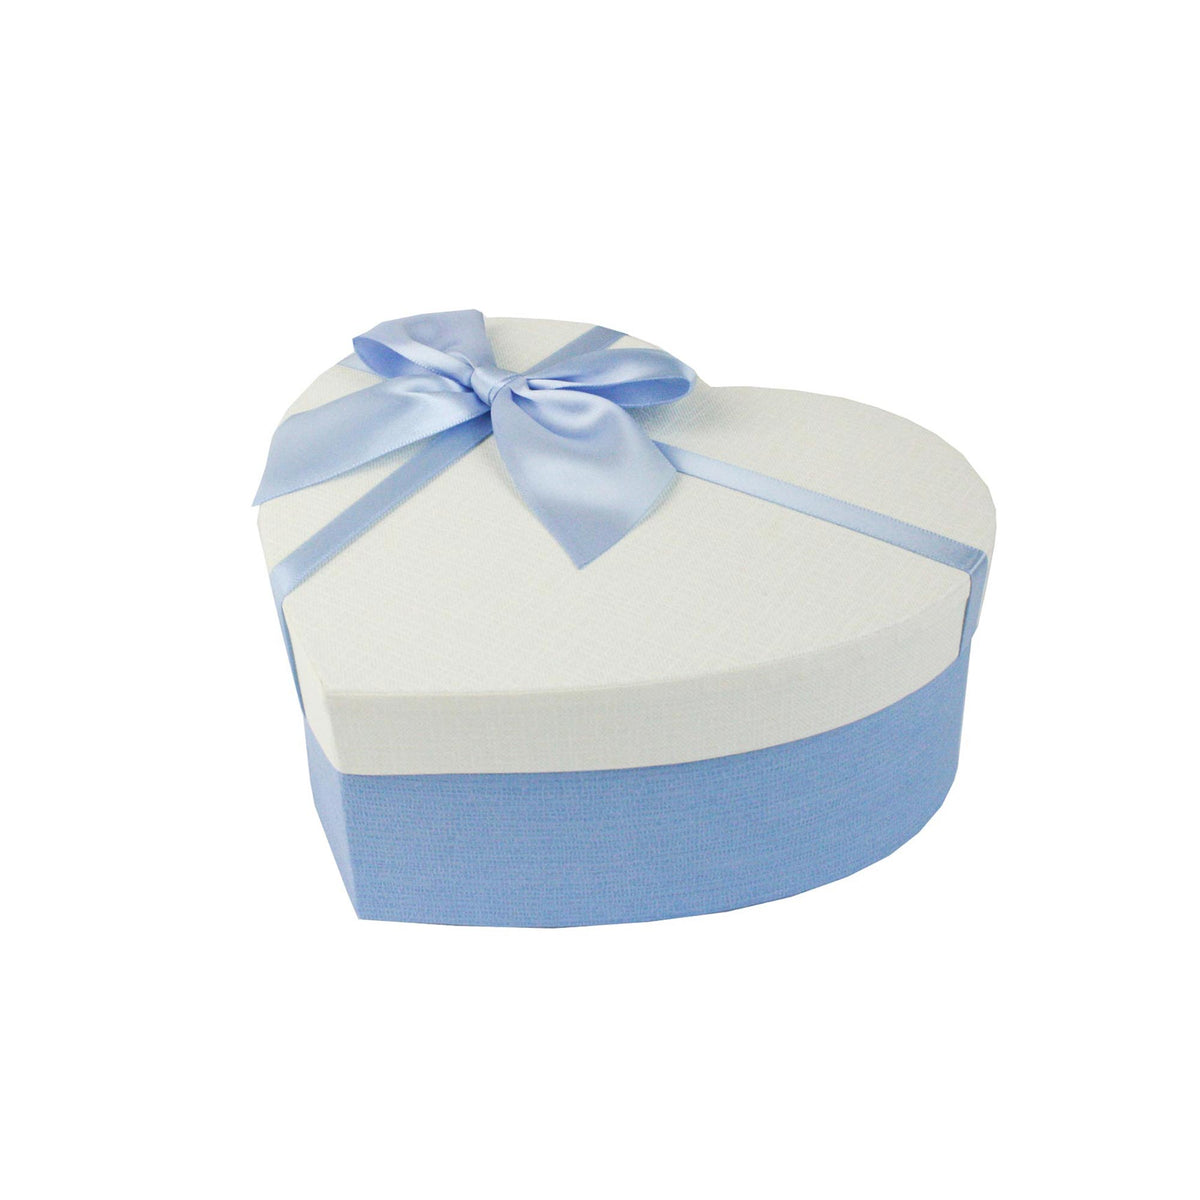 Luxury Heart Shaped Blue/White Gift Box - Single (Sizes Available)